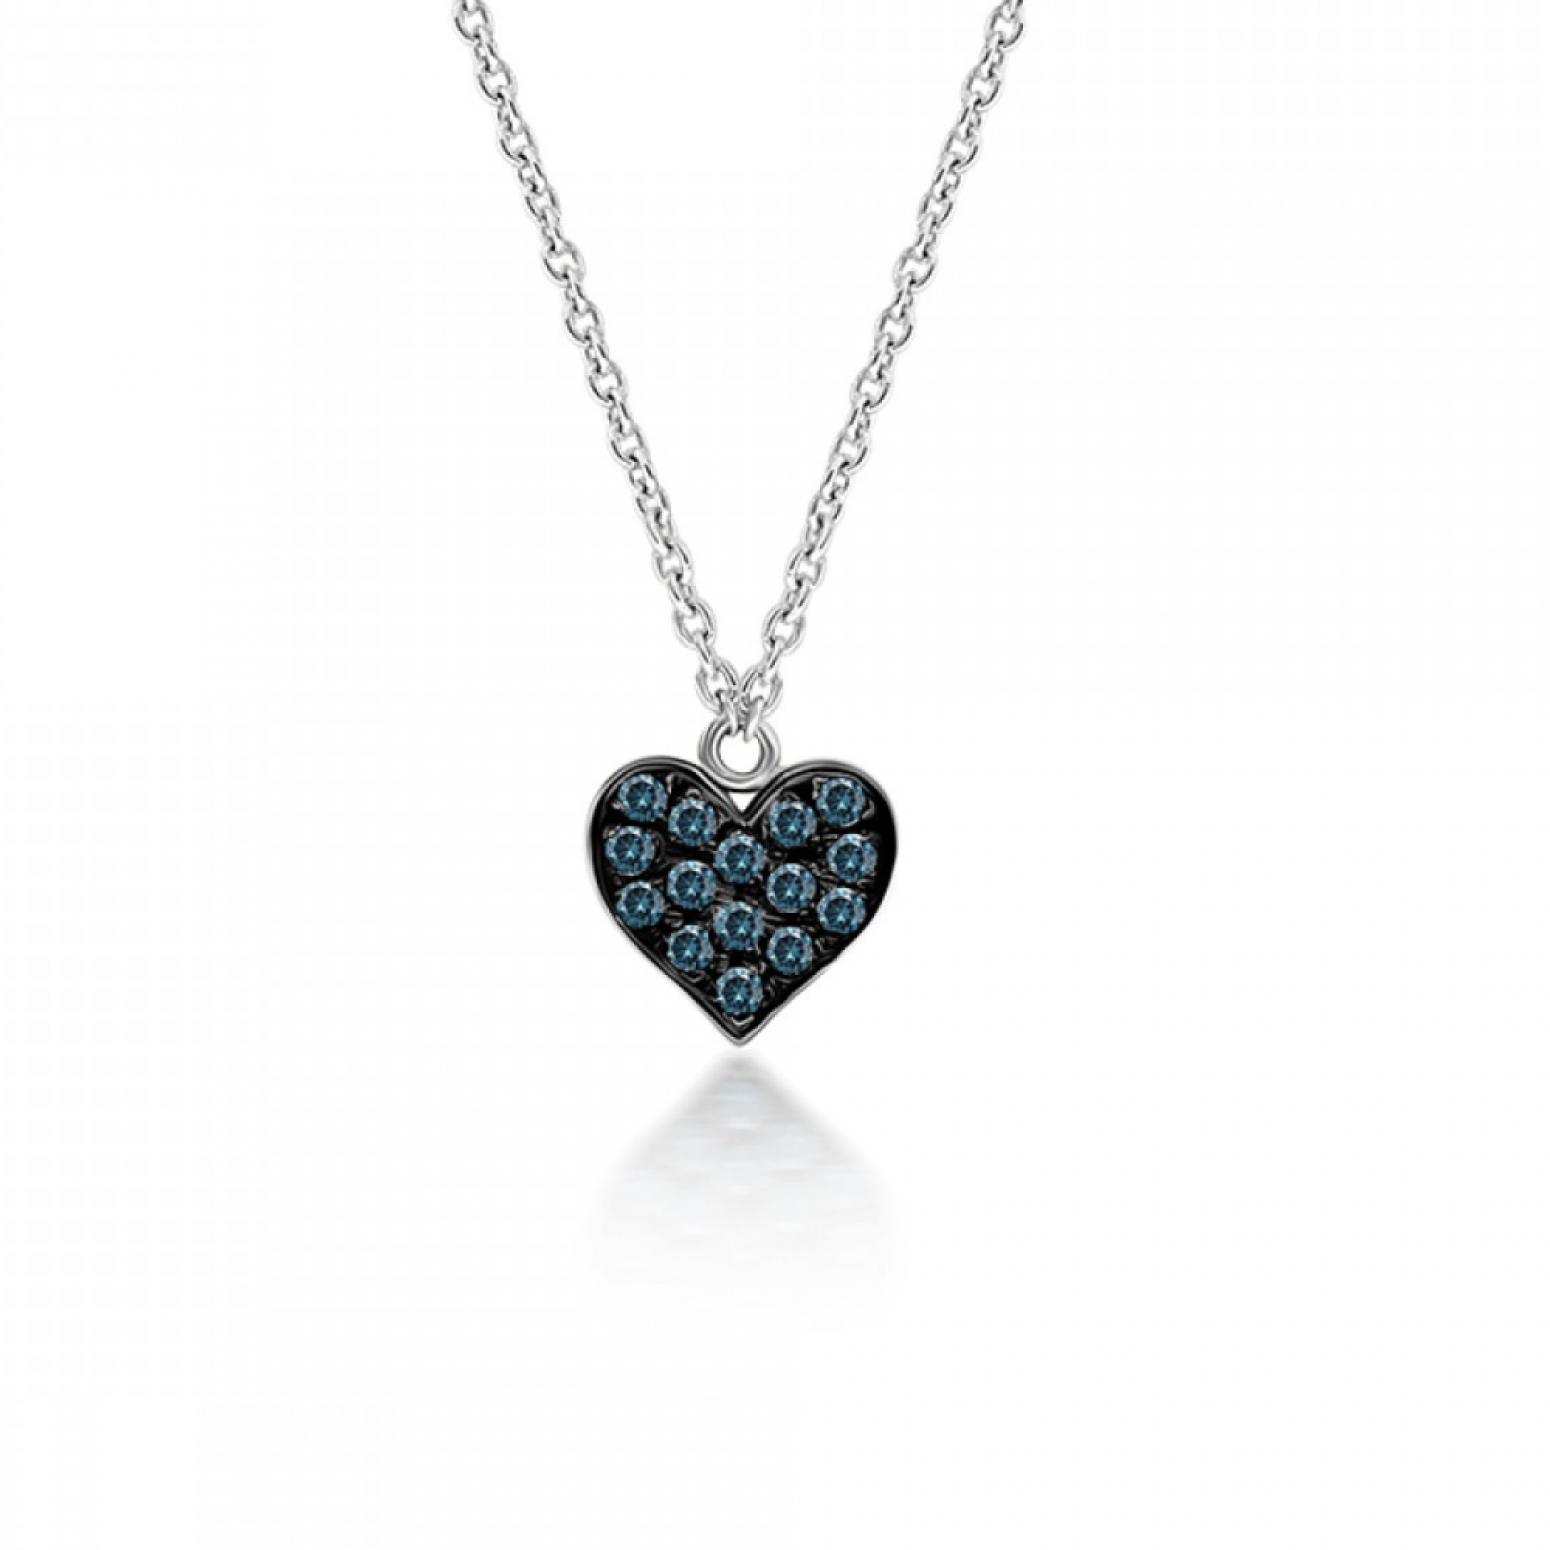 Heart necklace, Κ18 white gold with blue diamonds 0.13ct, ko4513 NECKLACES Κοσμηματα - chrilia.gr